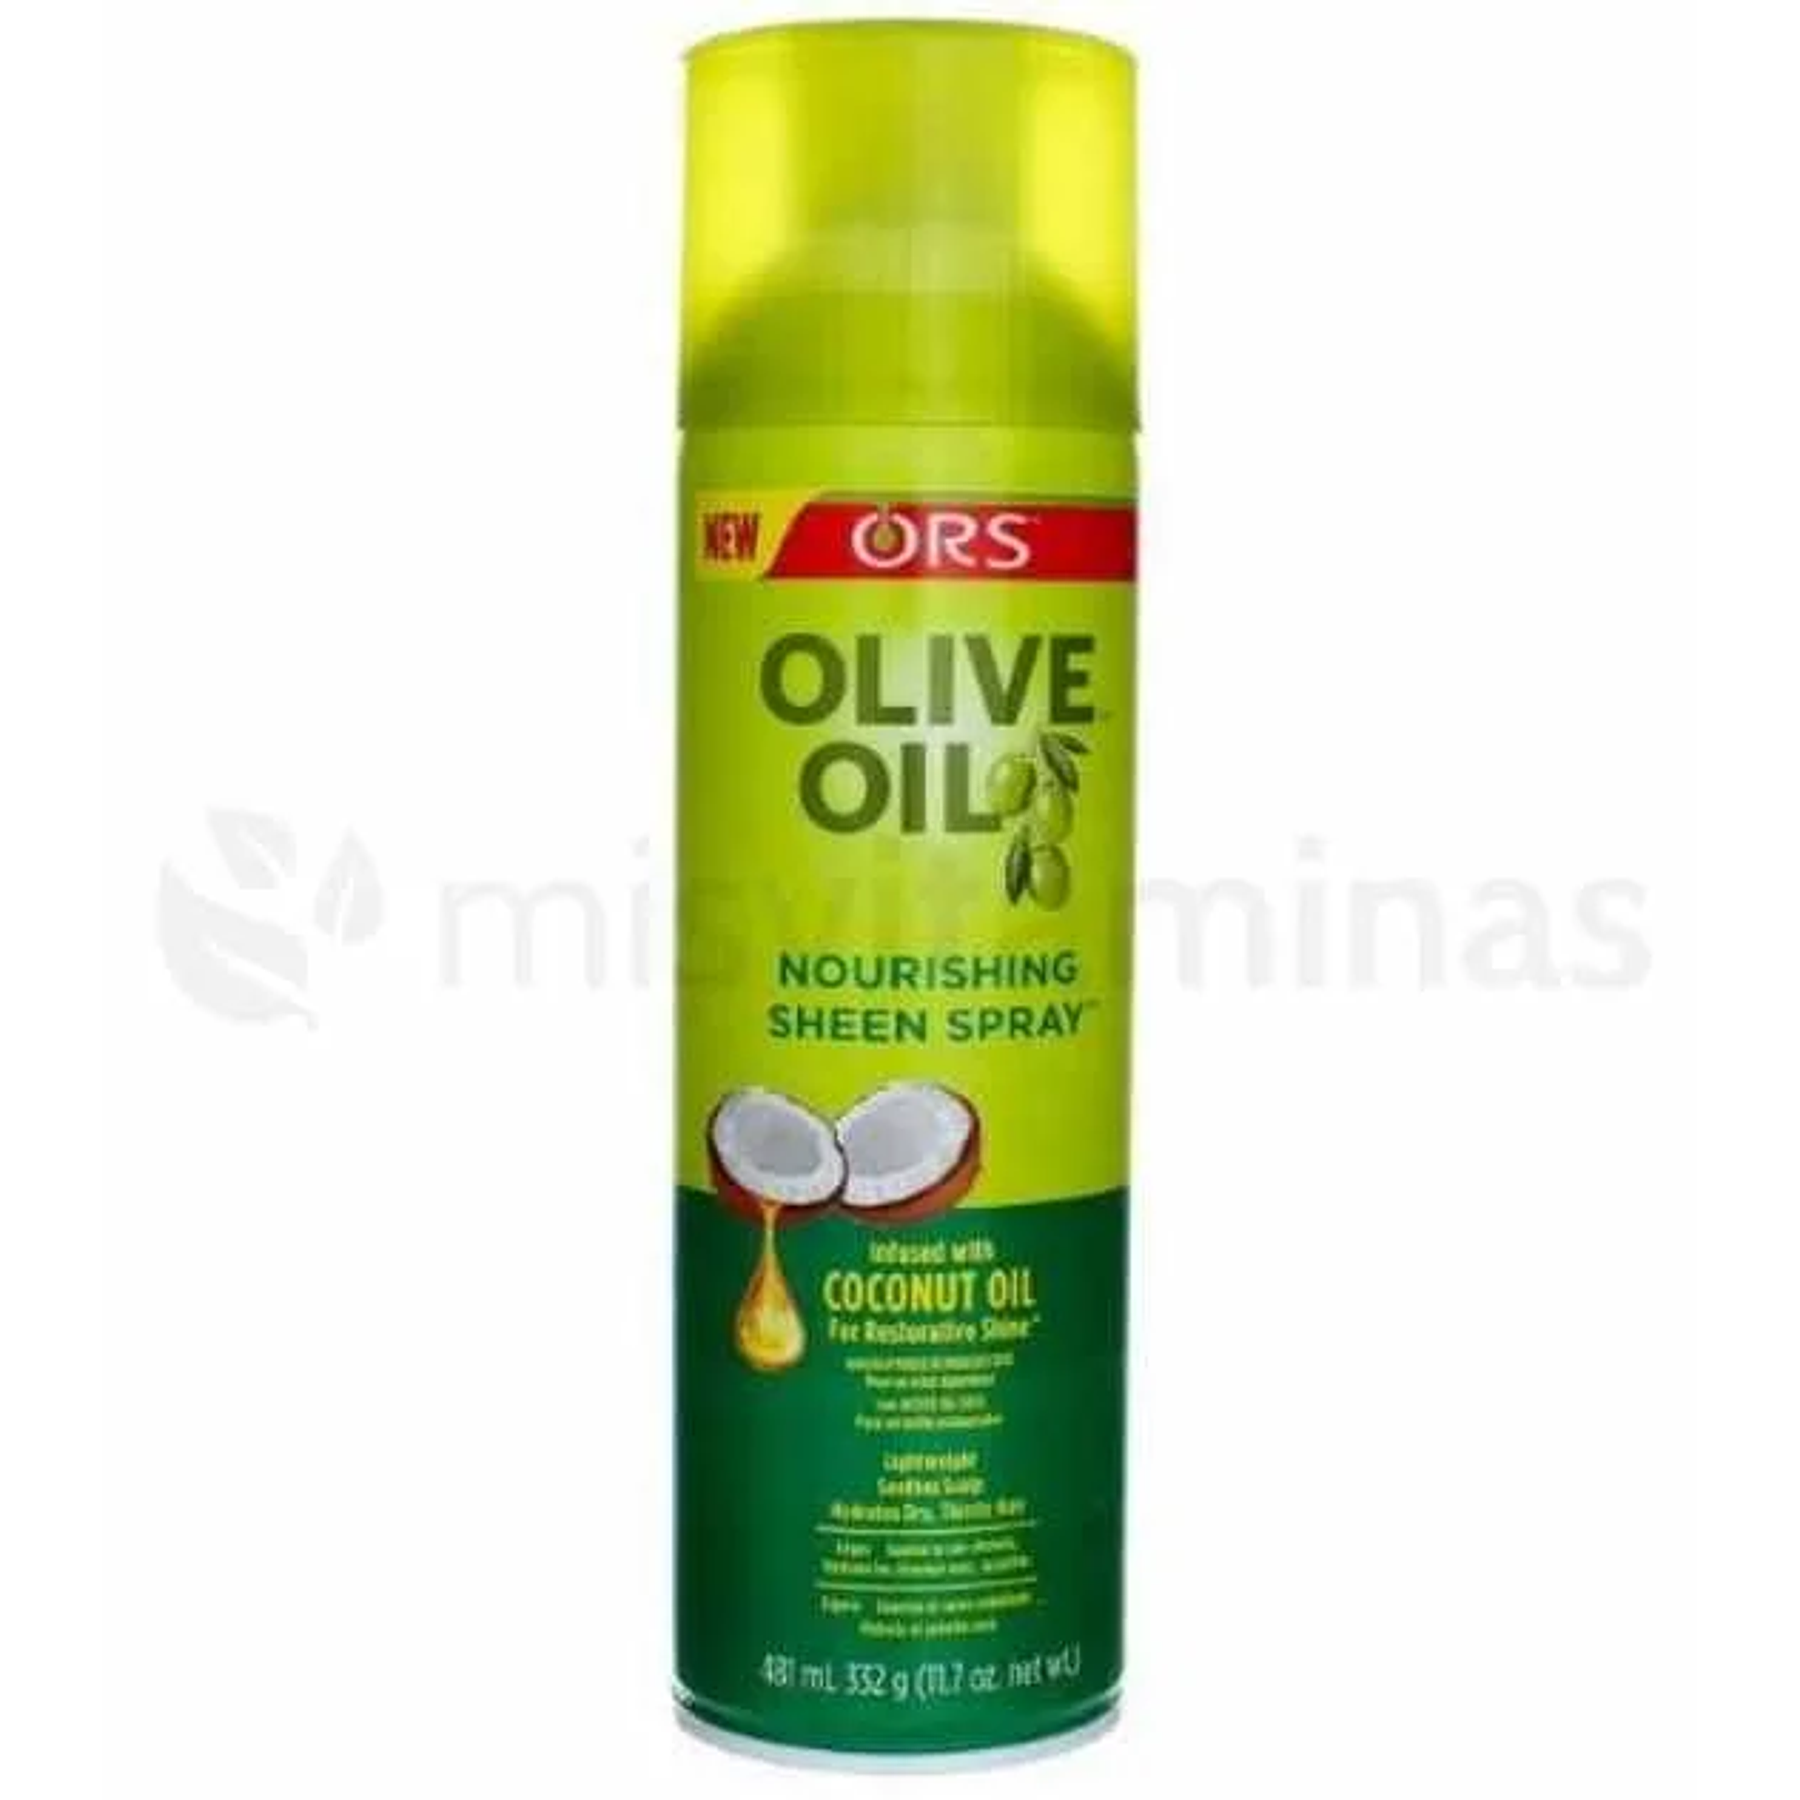 Olive Oil Aceite de oliva nutritivo  Spray